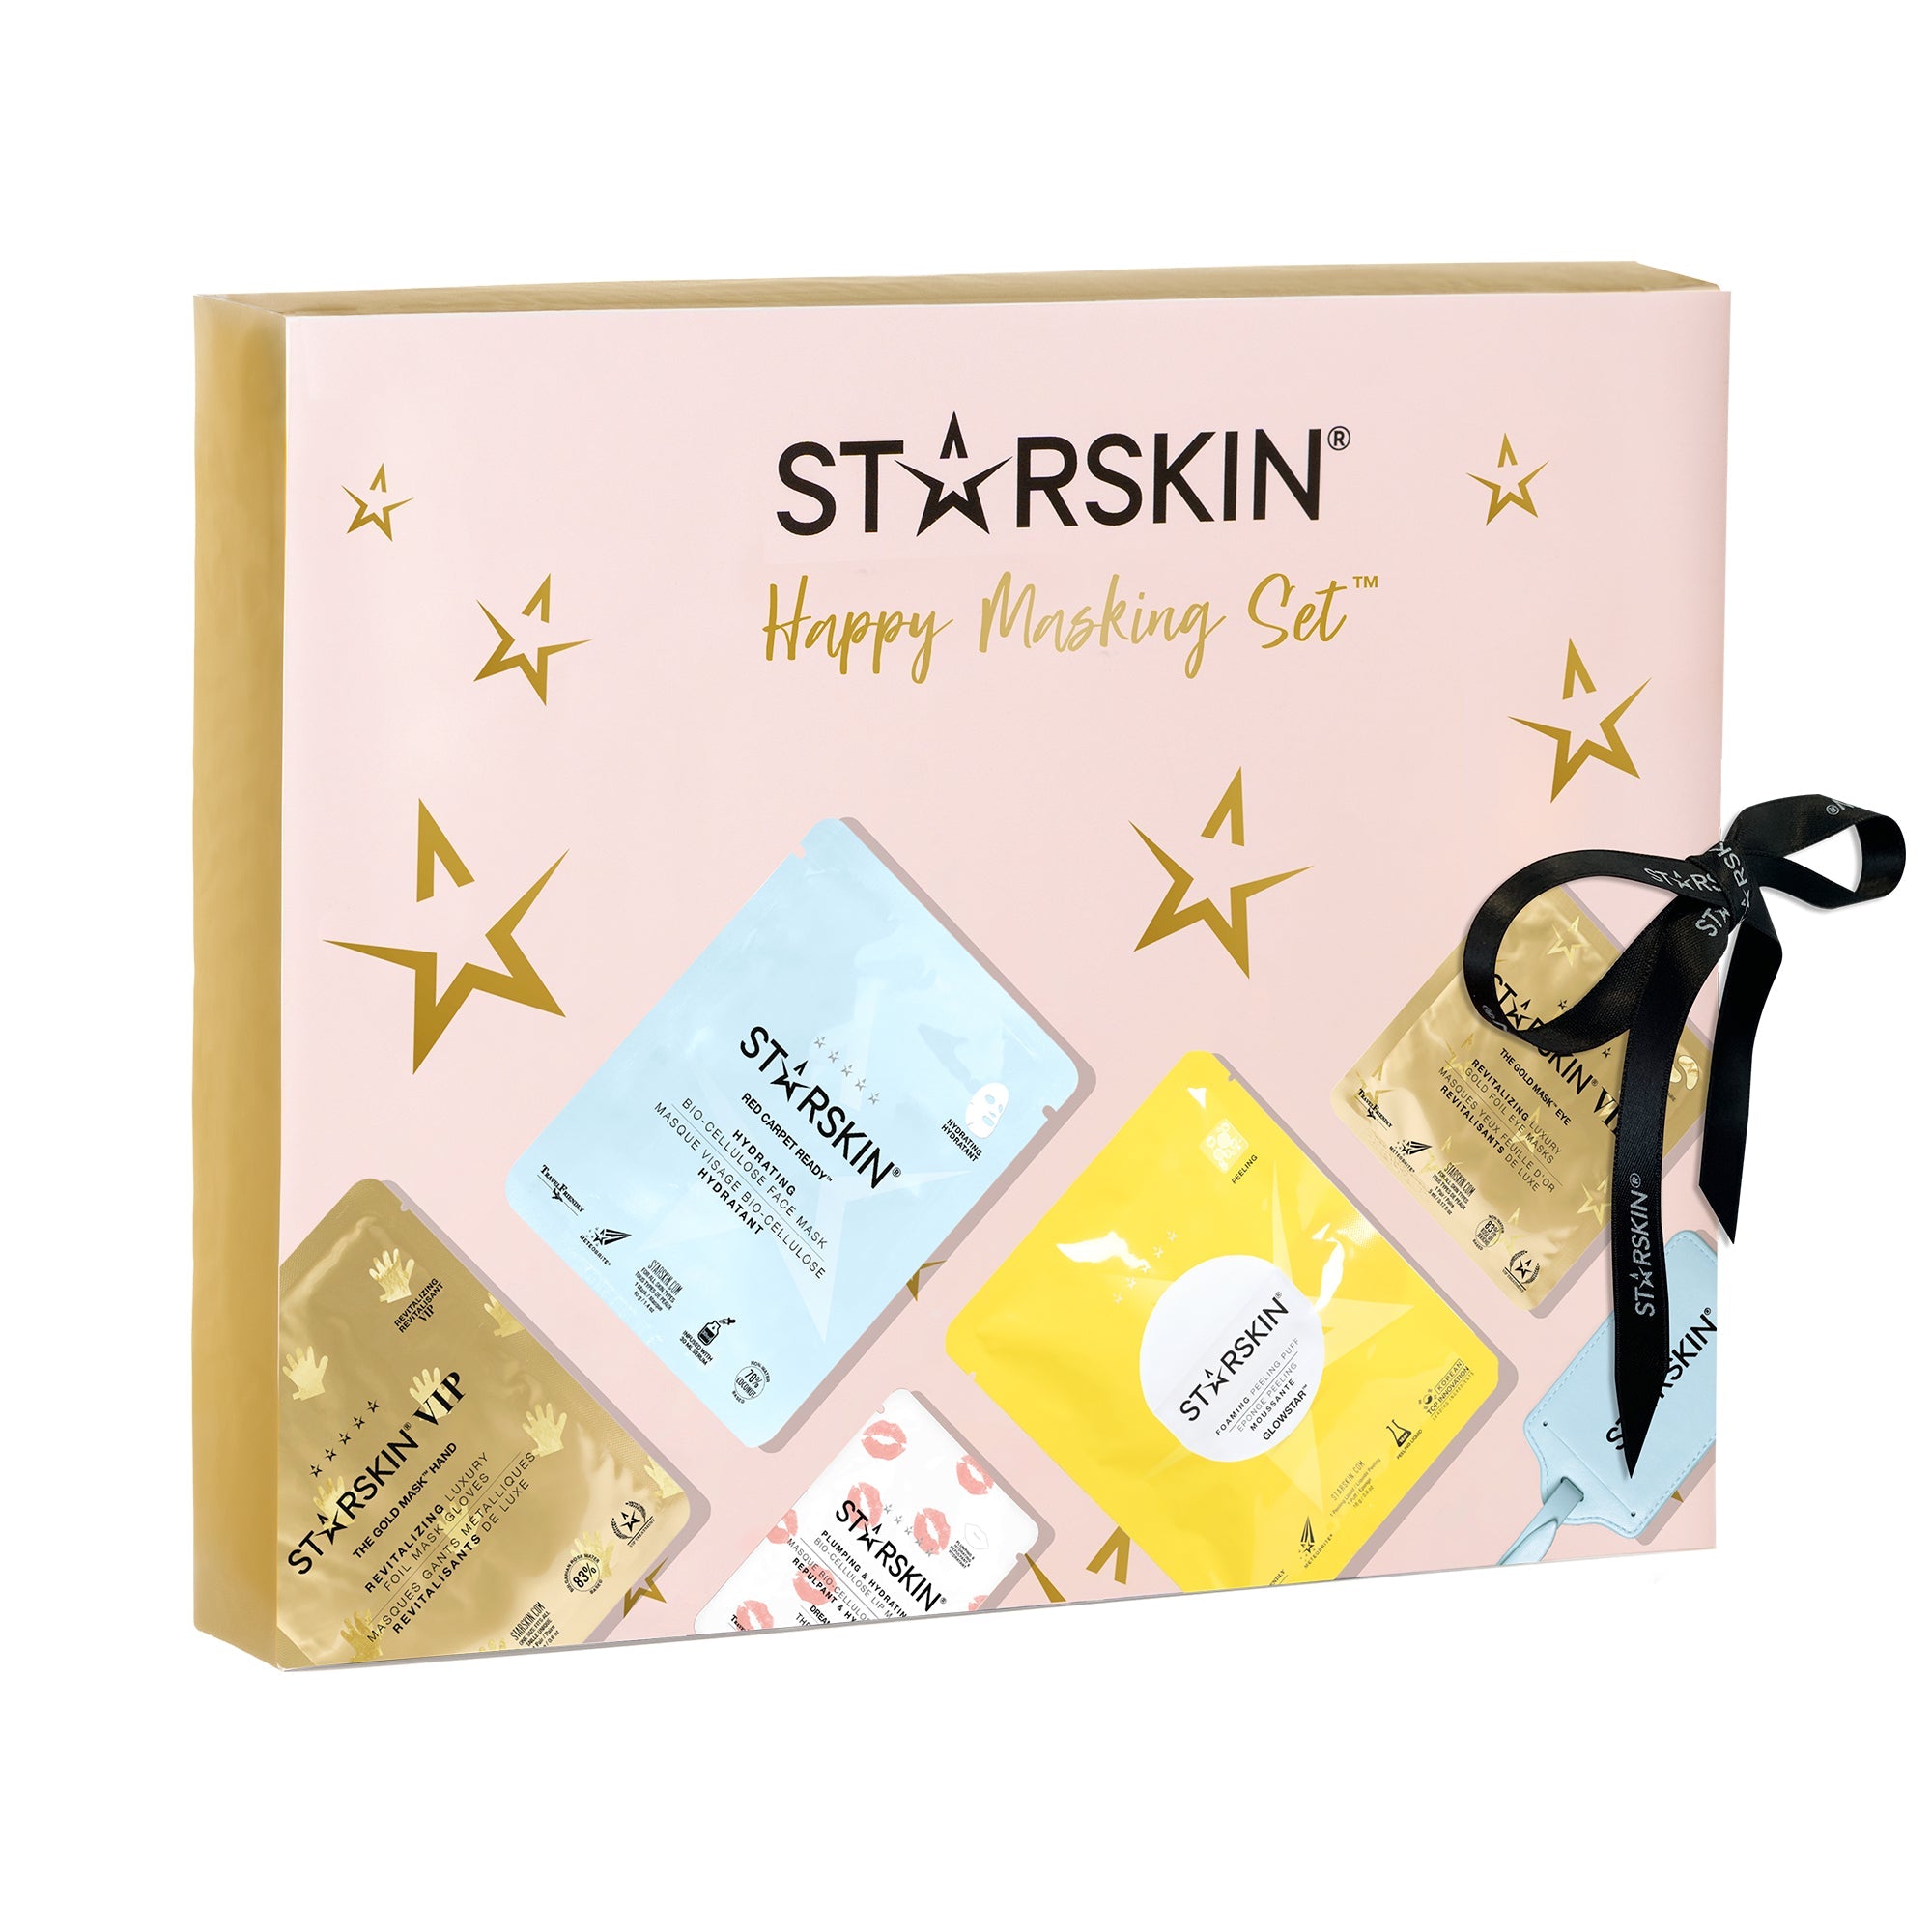 STARSKIN Happy Masking Gift set Grace Beauty